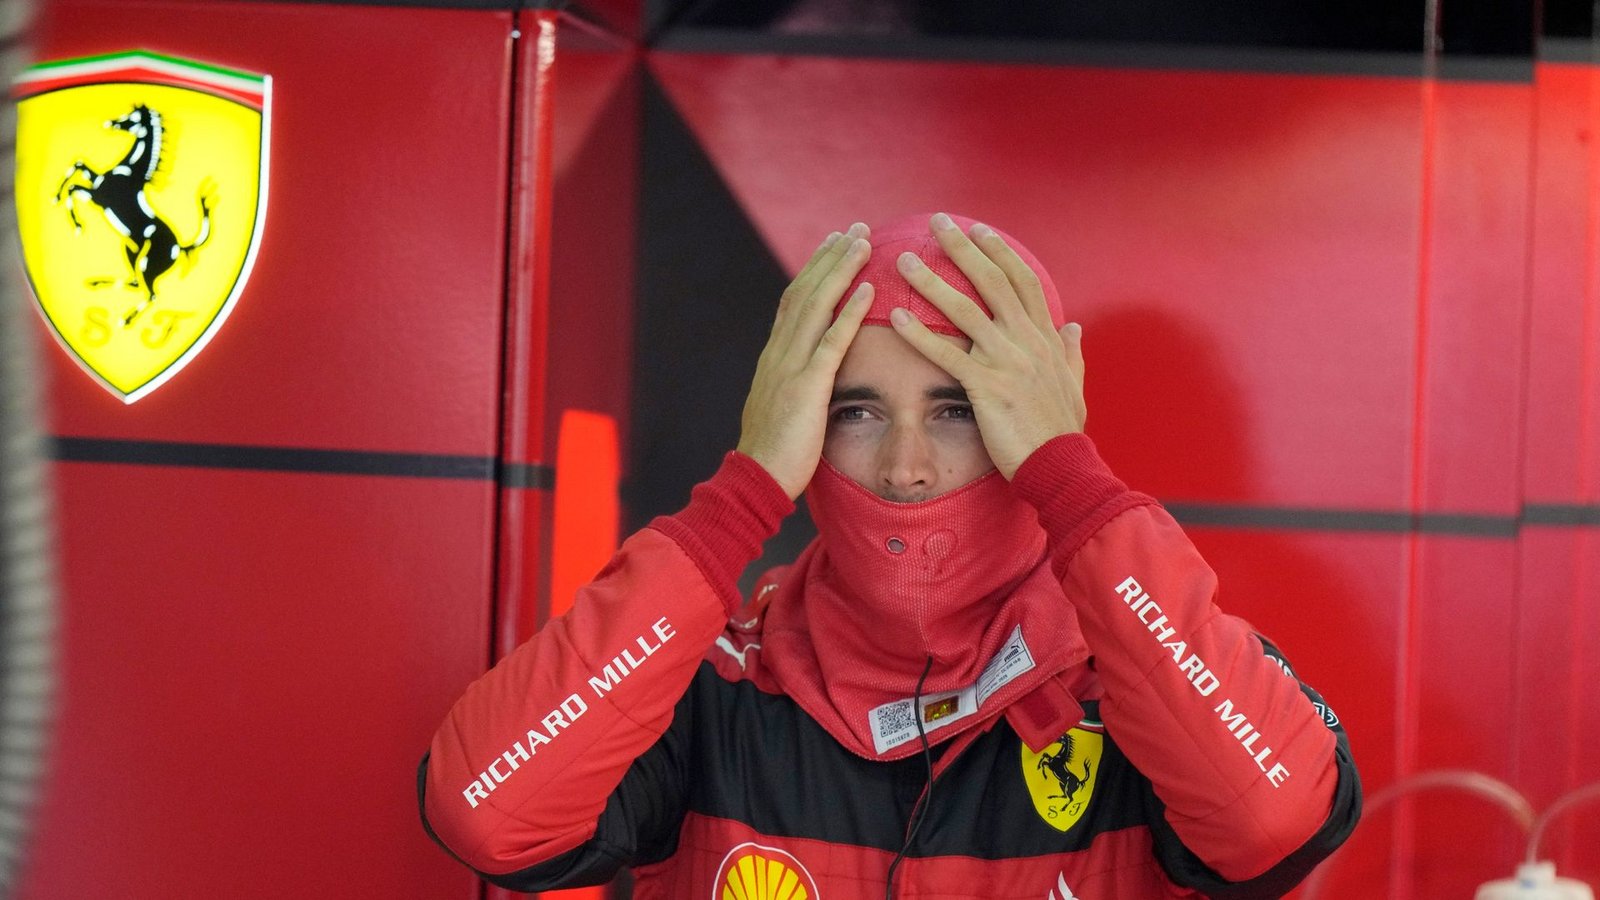 Ferrari-Pilot Charles Leclerc setzt vor Beginn des Freien Trainings seine Sturmhaube auf.Foto: Luca Bruno/AP/dpa